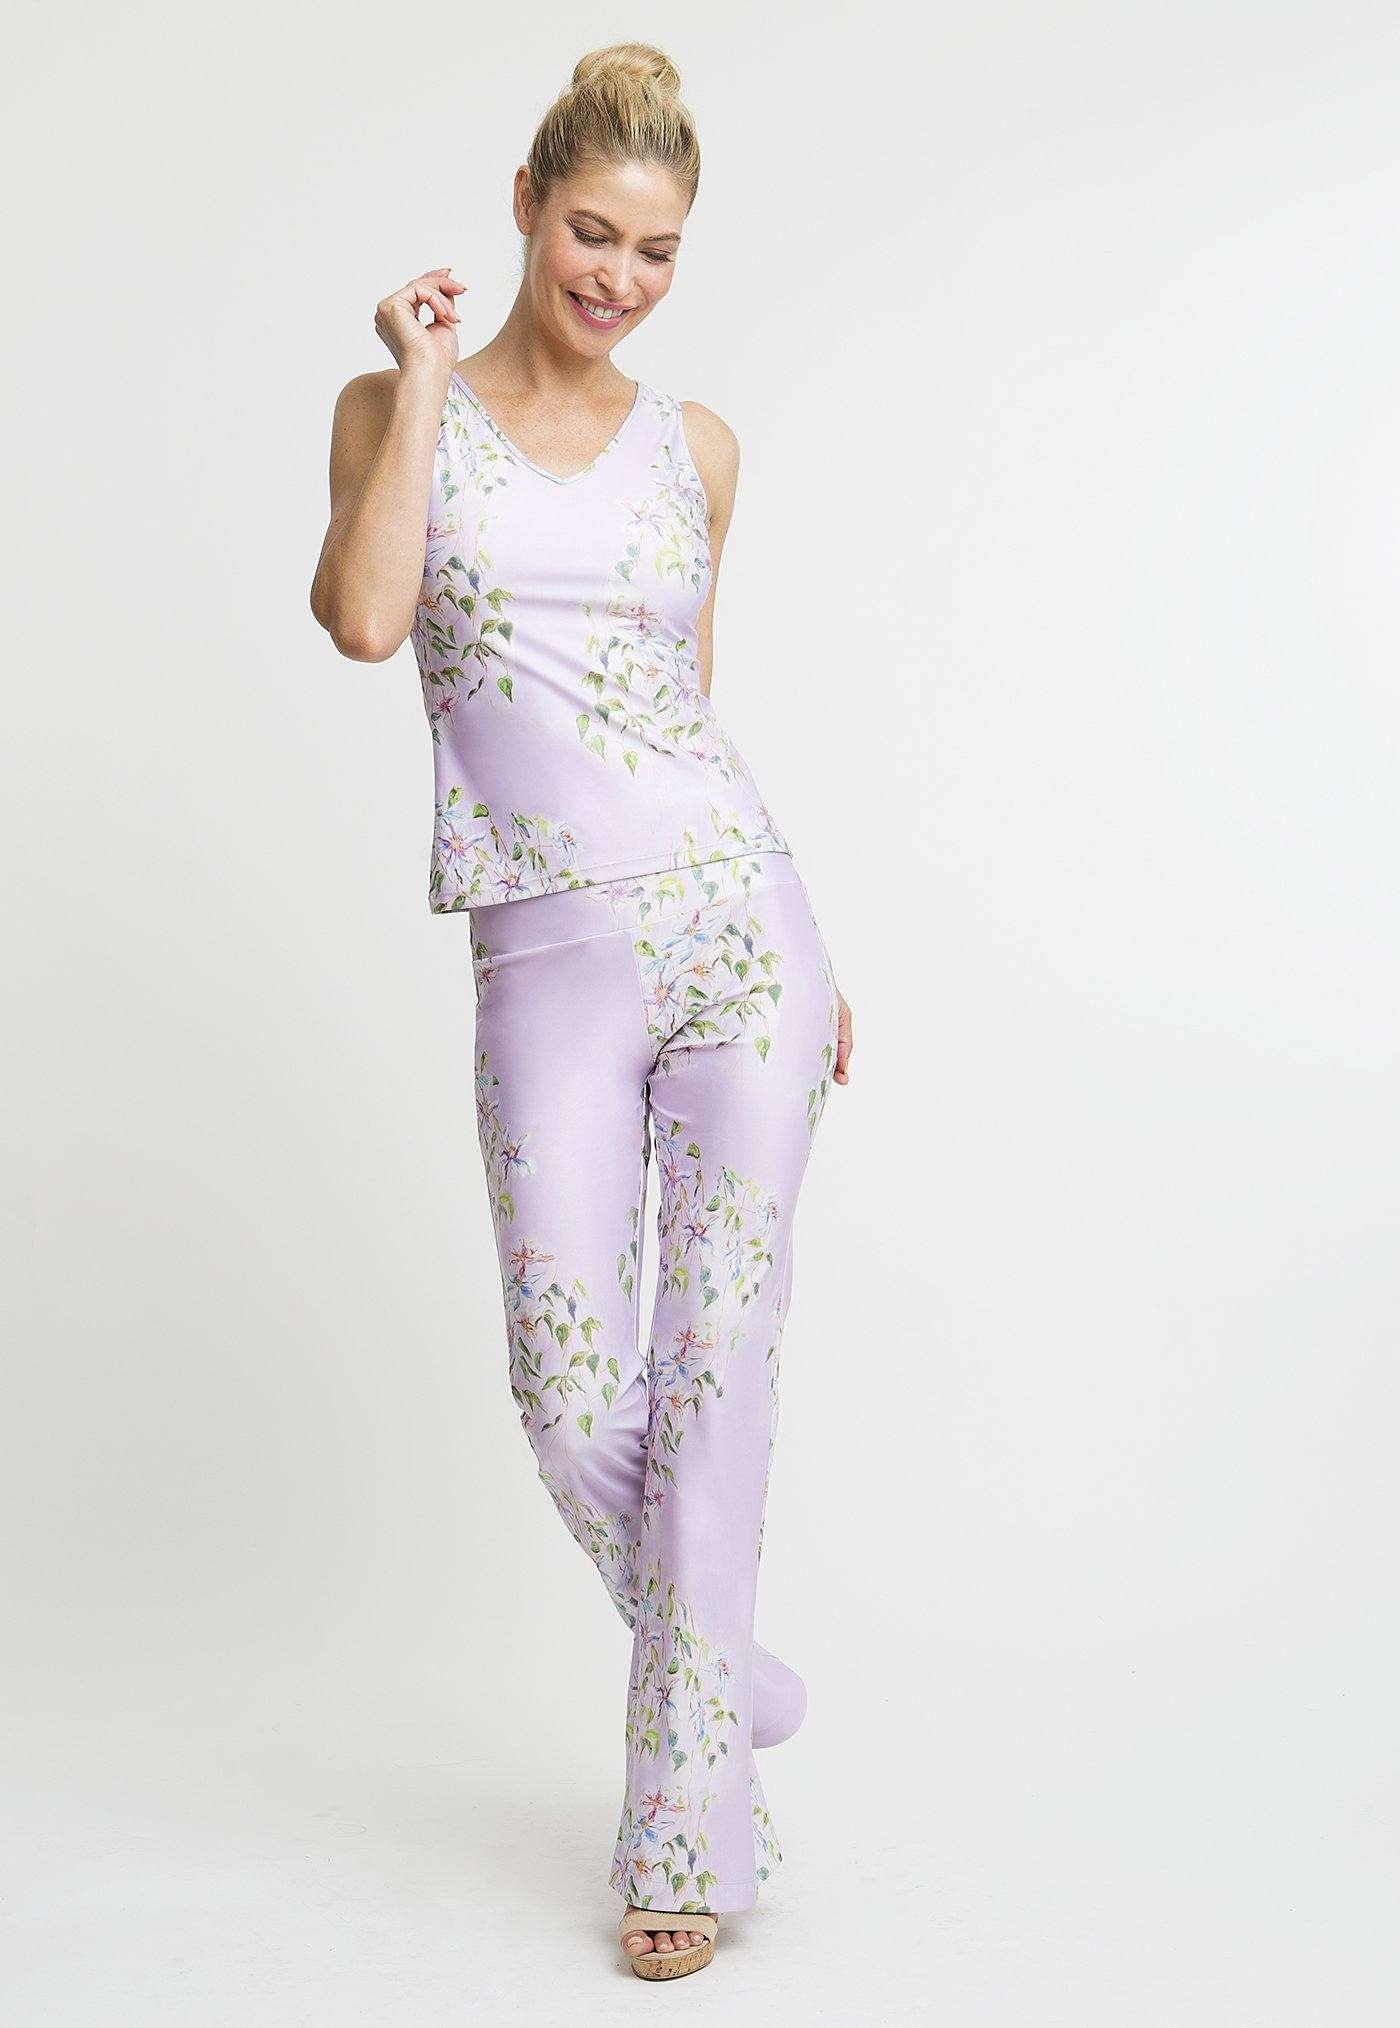 lavender flower printed stretch knit pants with lavender flower printed stretch knit tank top